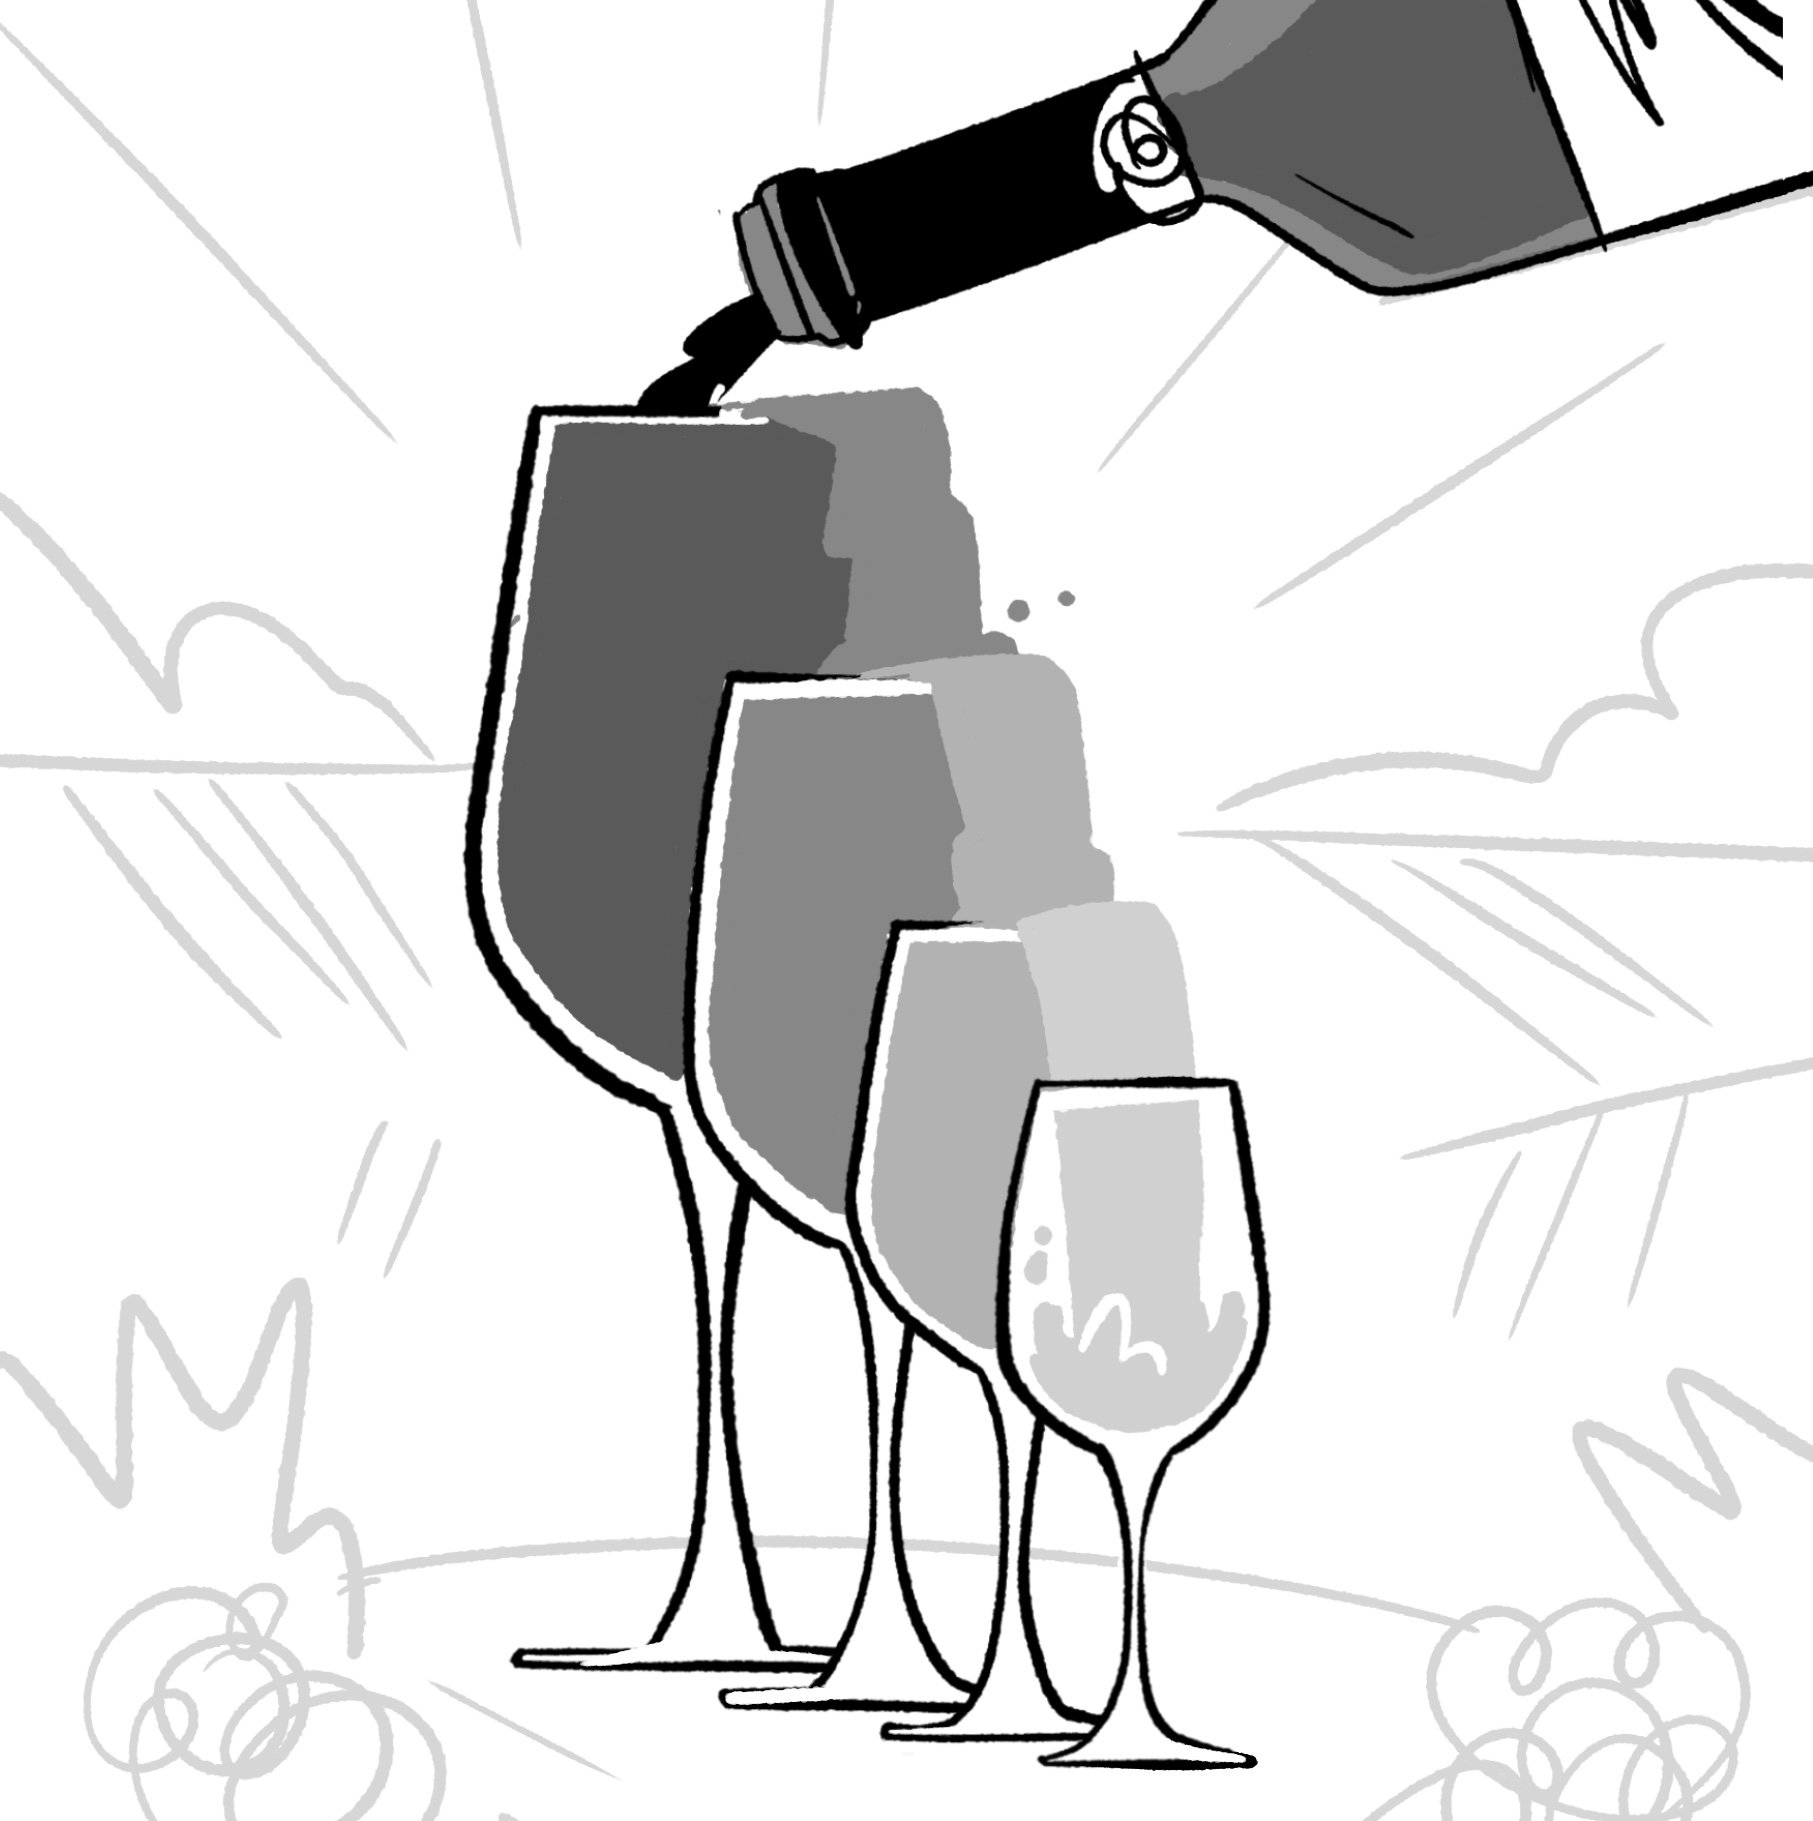 WSJ Wine Generations - Sketch 4v2.jpg